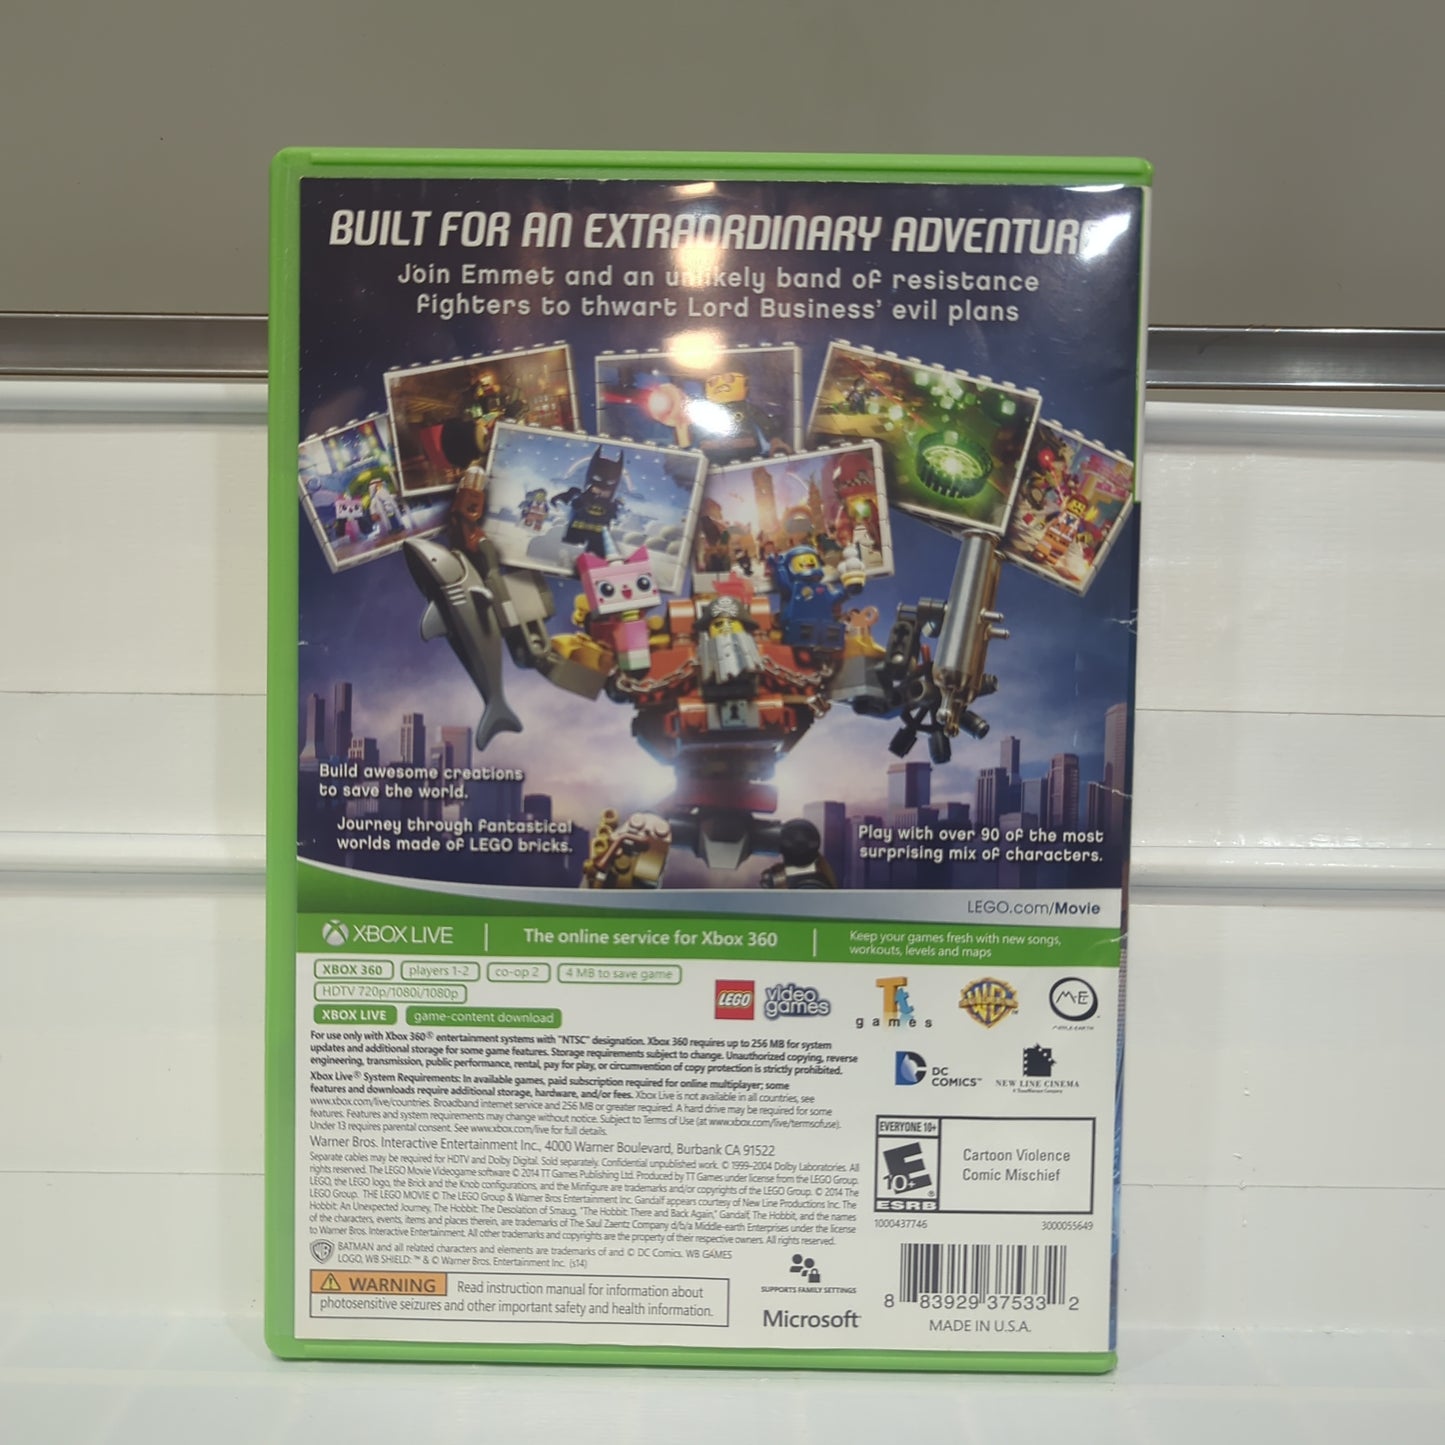 LEGO Movie Videogame - Xbox 360